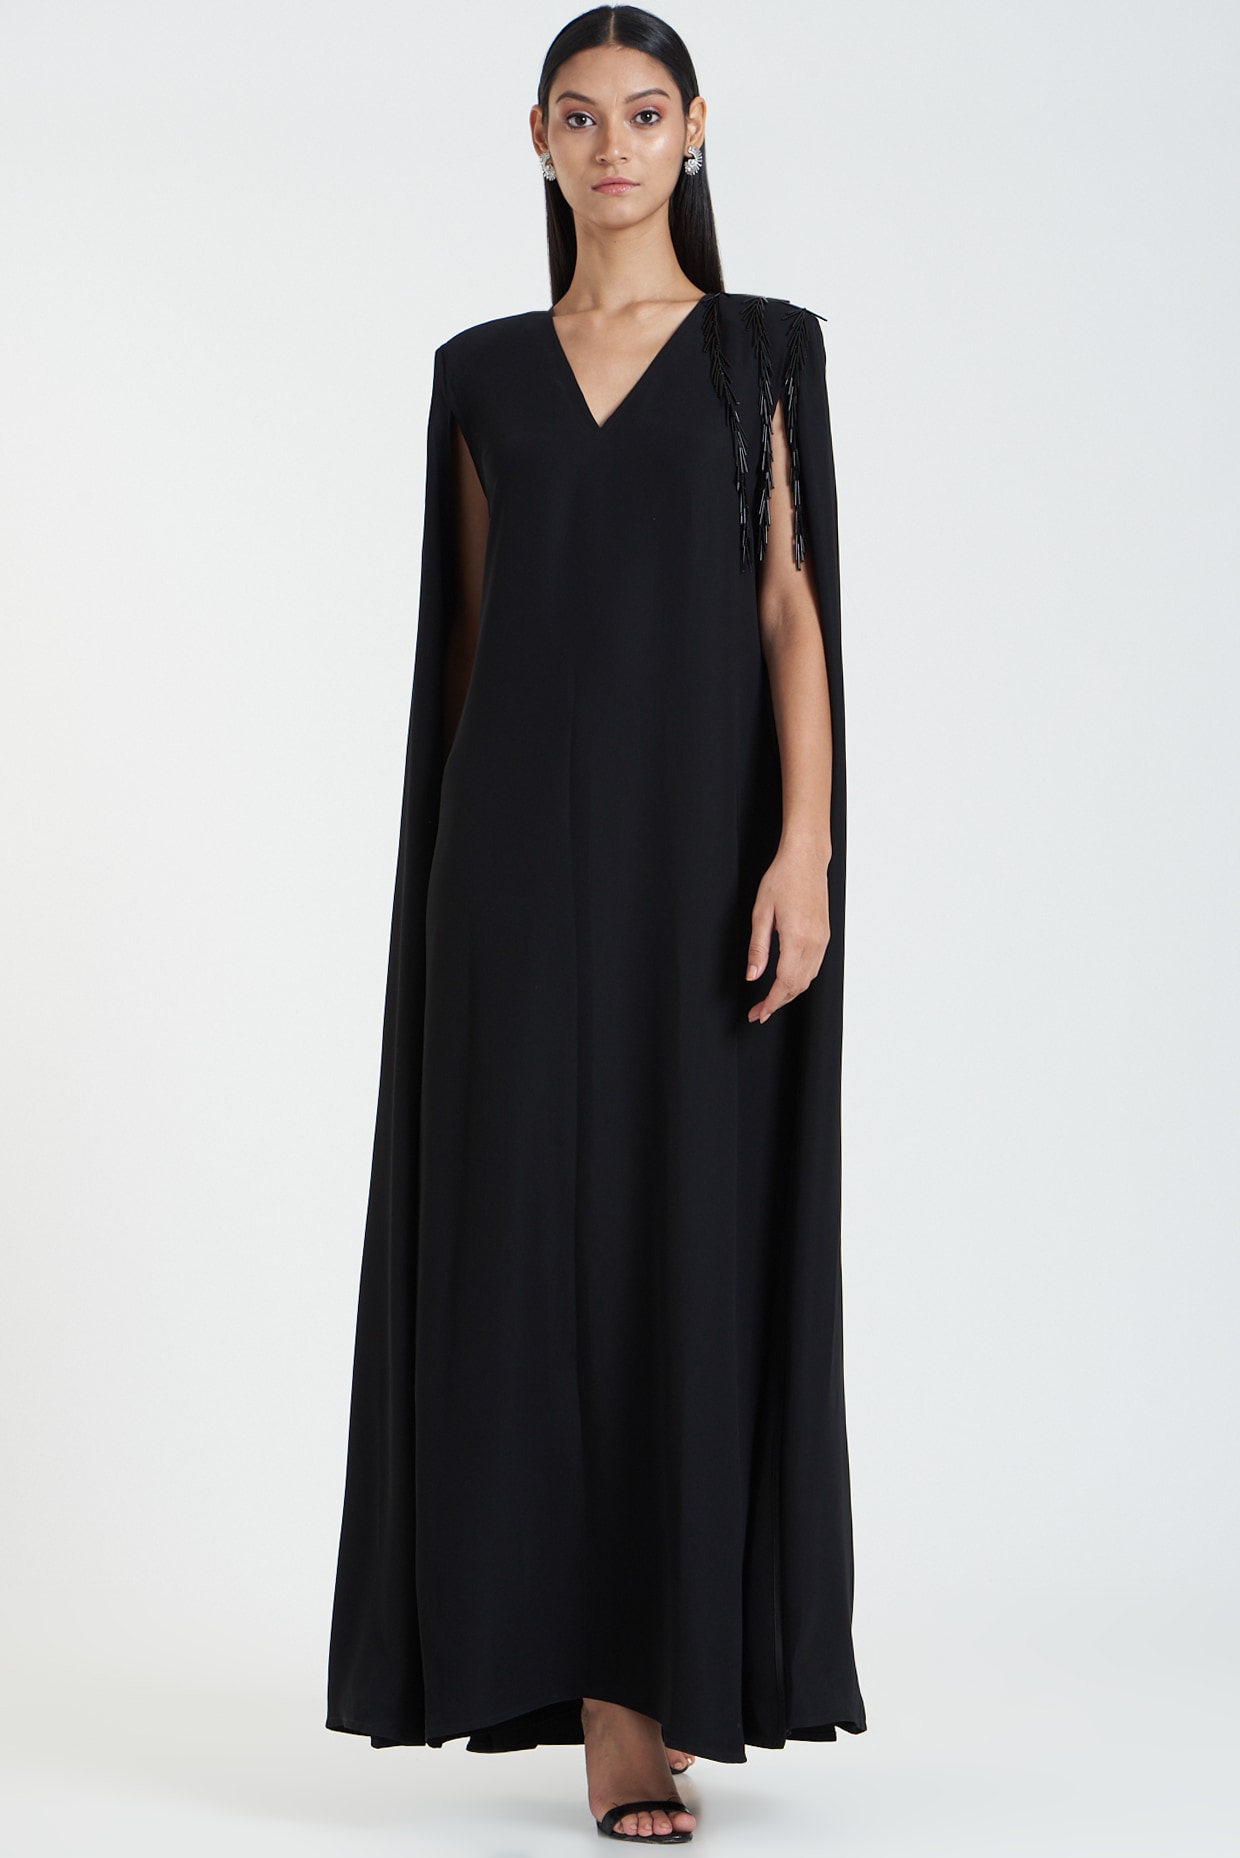 Black halter Empire waist Maxi Dress with cape | Sumissura